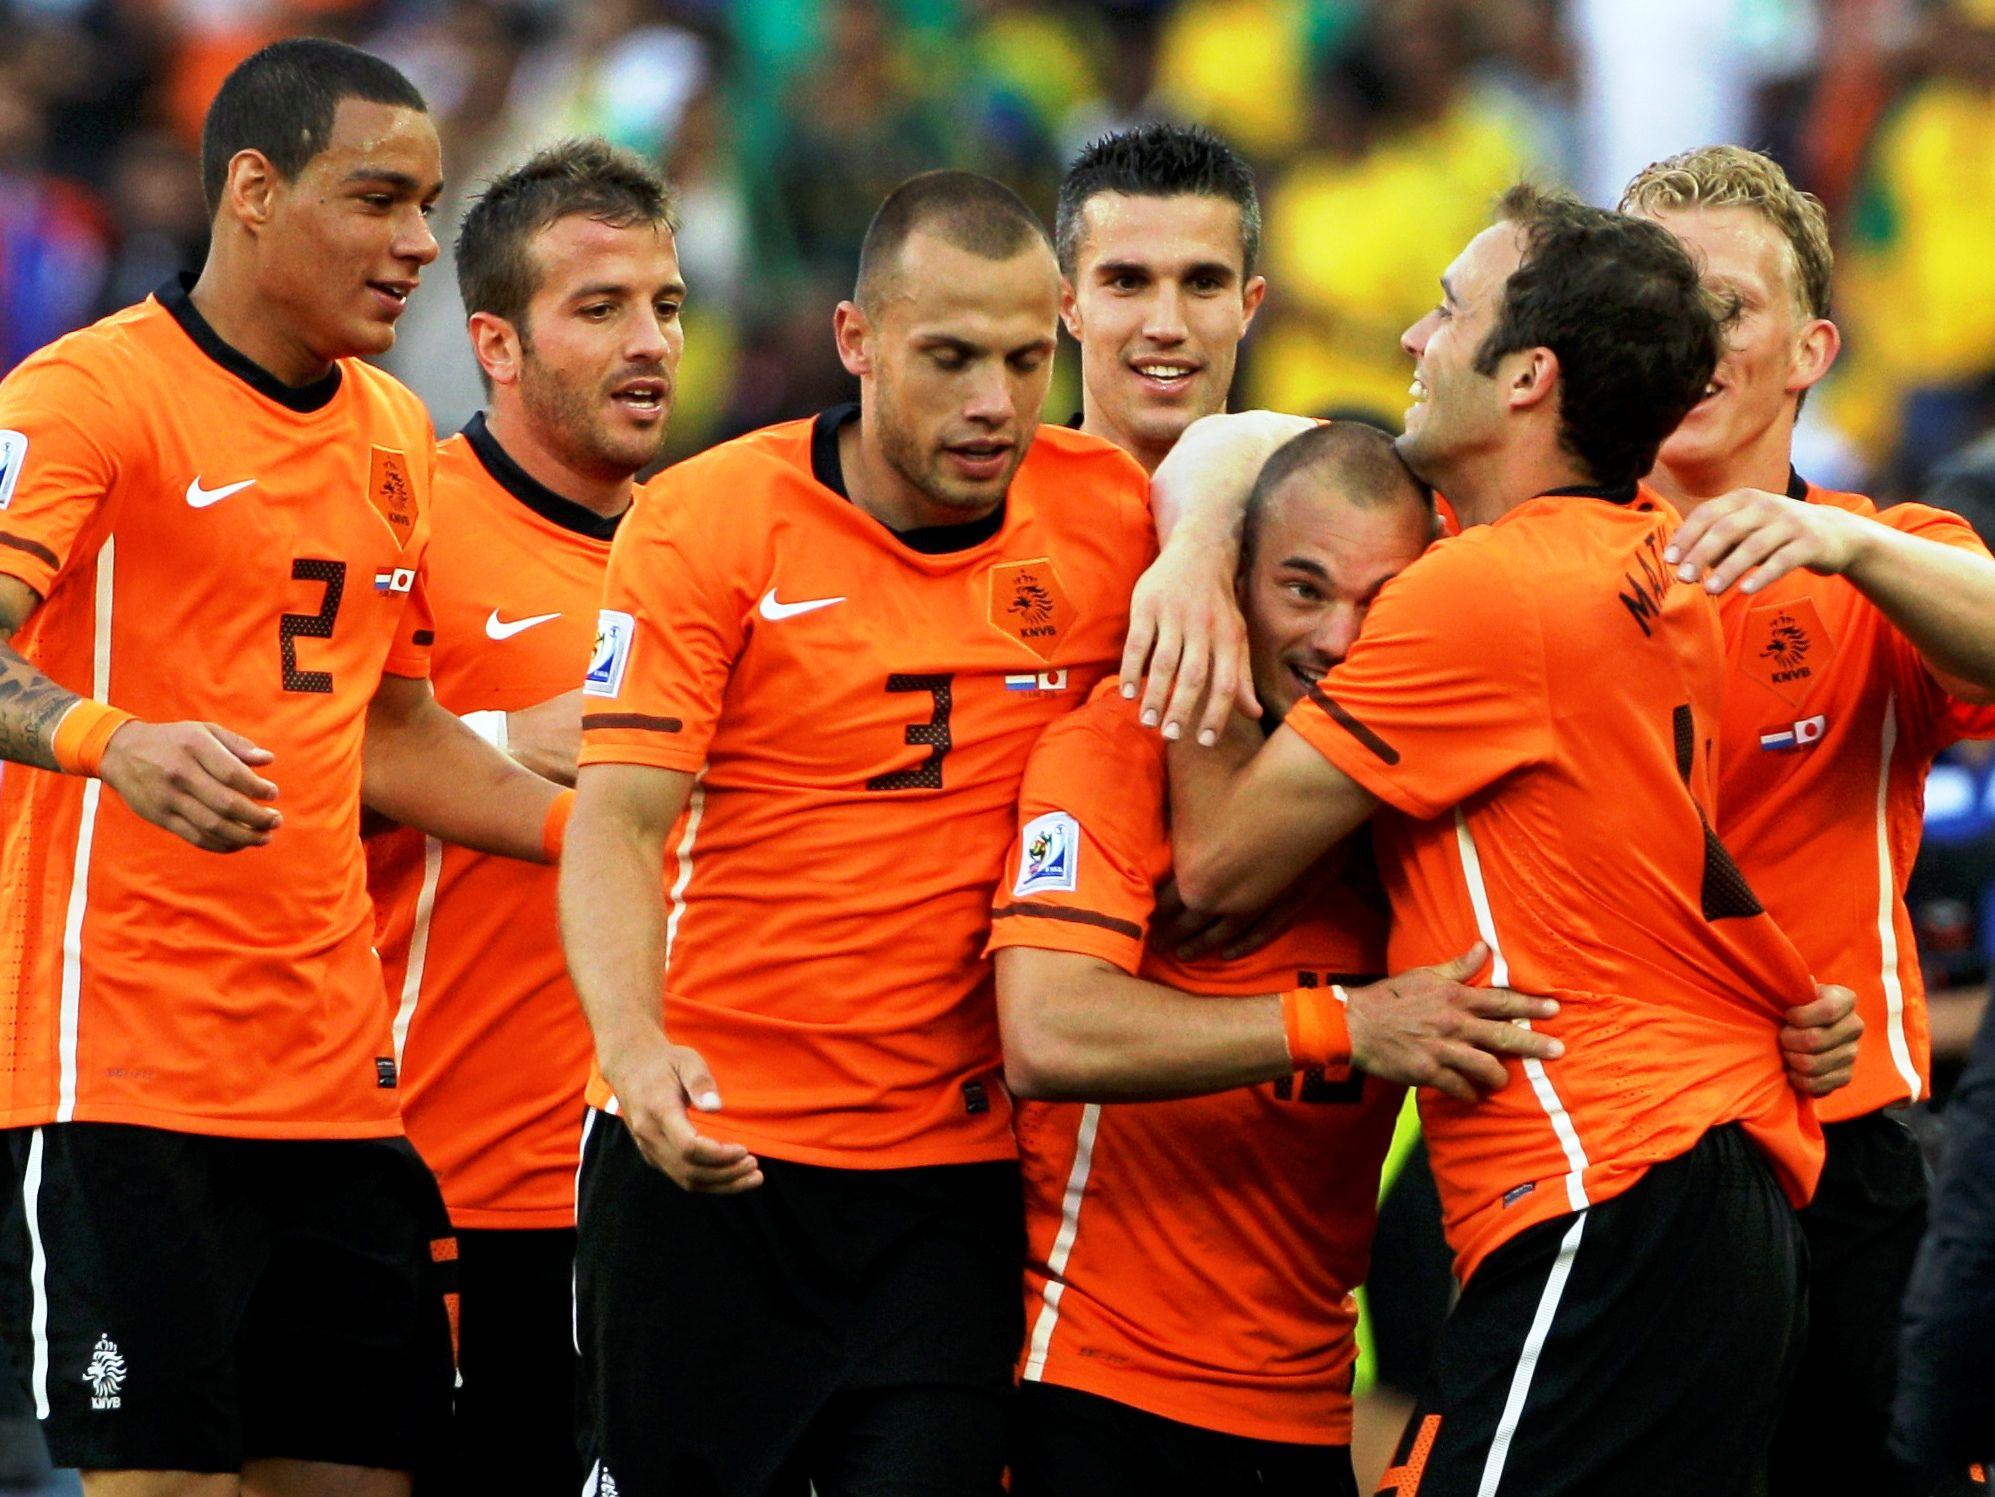 Belanda. Soccerpicture. Share Wallpaper, Photo, National